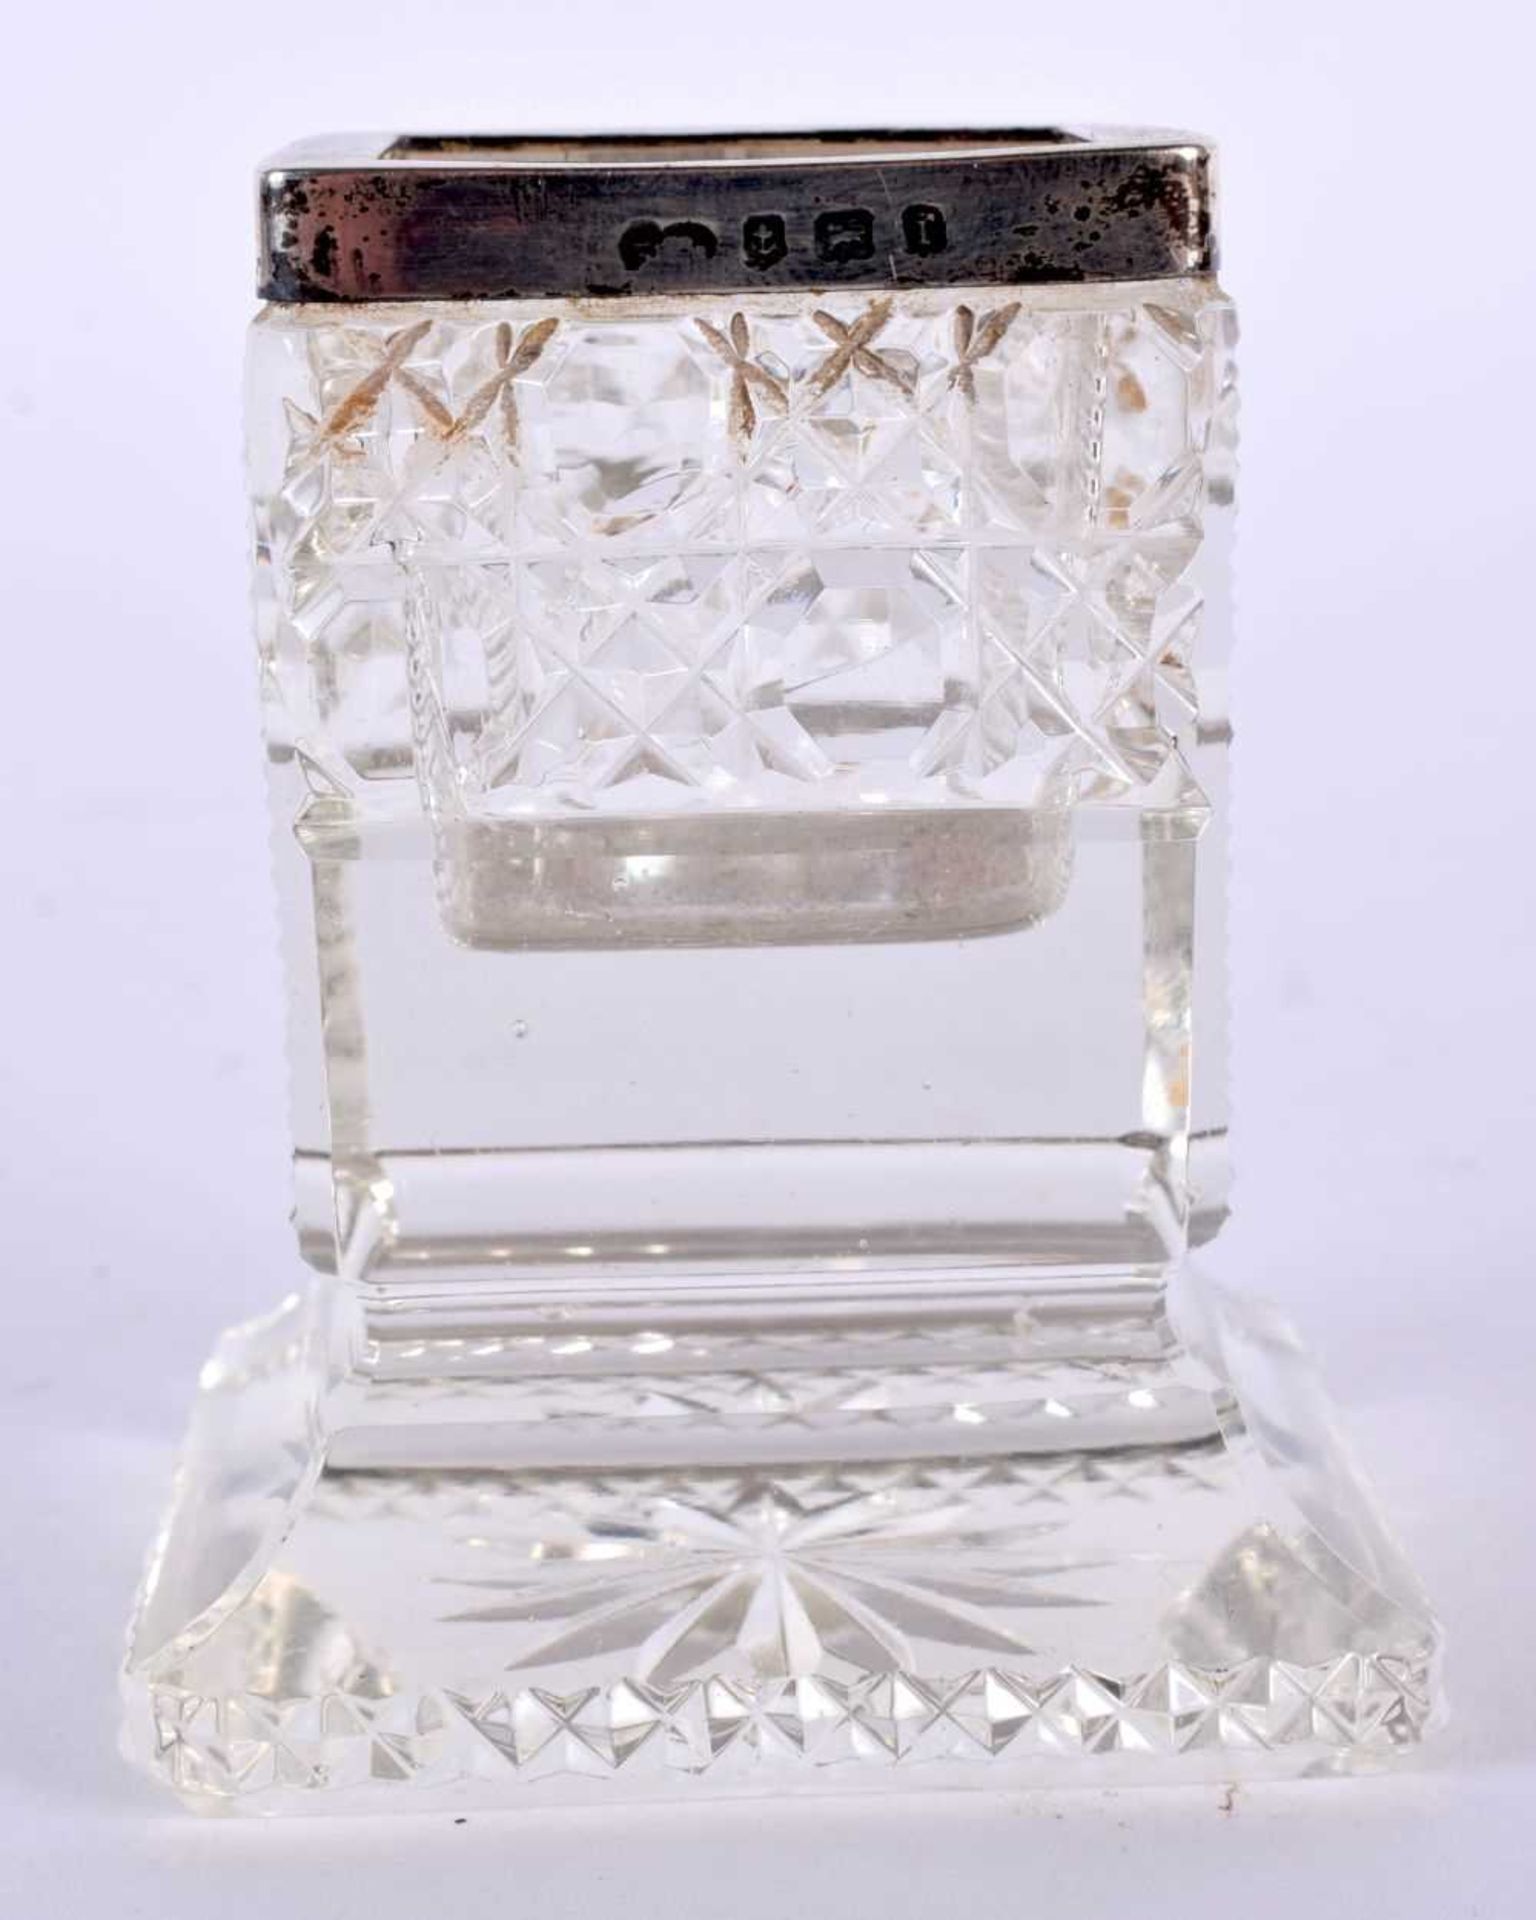 A RARE ANTIQUE SILVER MOUNTED CUT GLASS MATCH STRIKER. 8 cm x 4 cm.